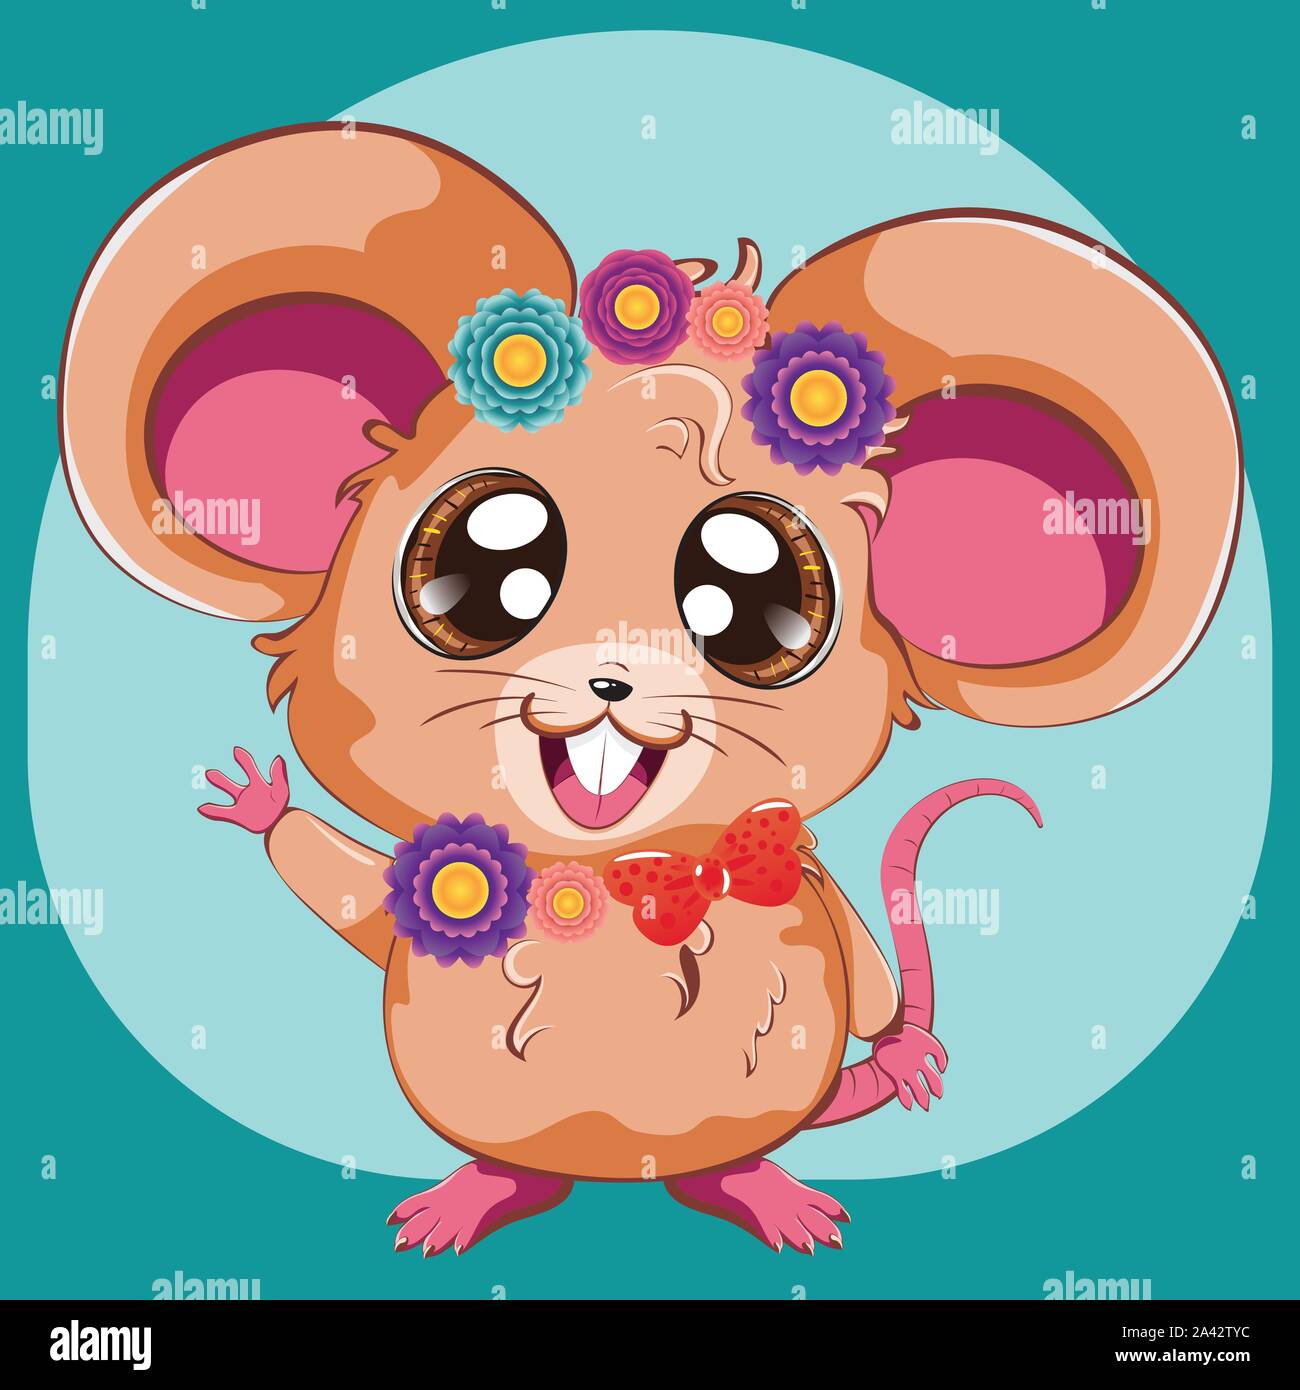 Cartoon kawaii anime mouse or rat with colorful flowers design Stock Vector  Image & Art - Alamy